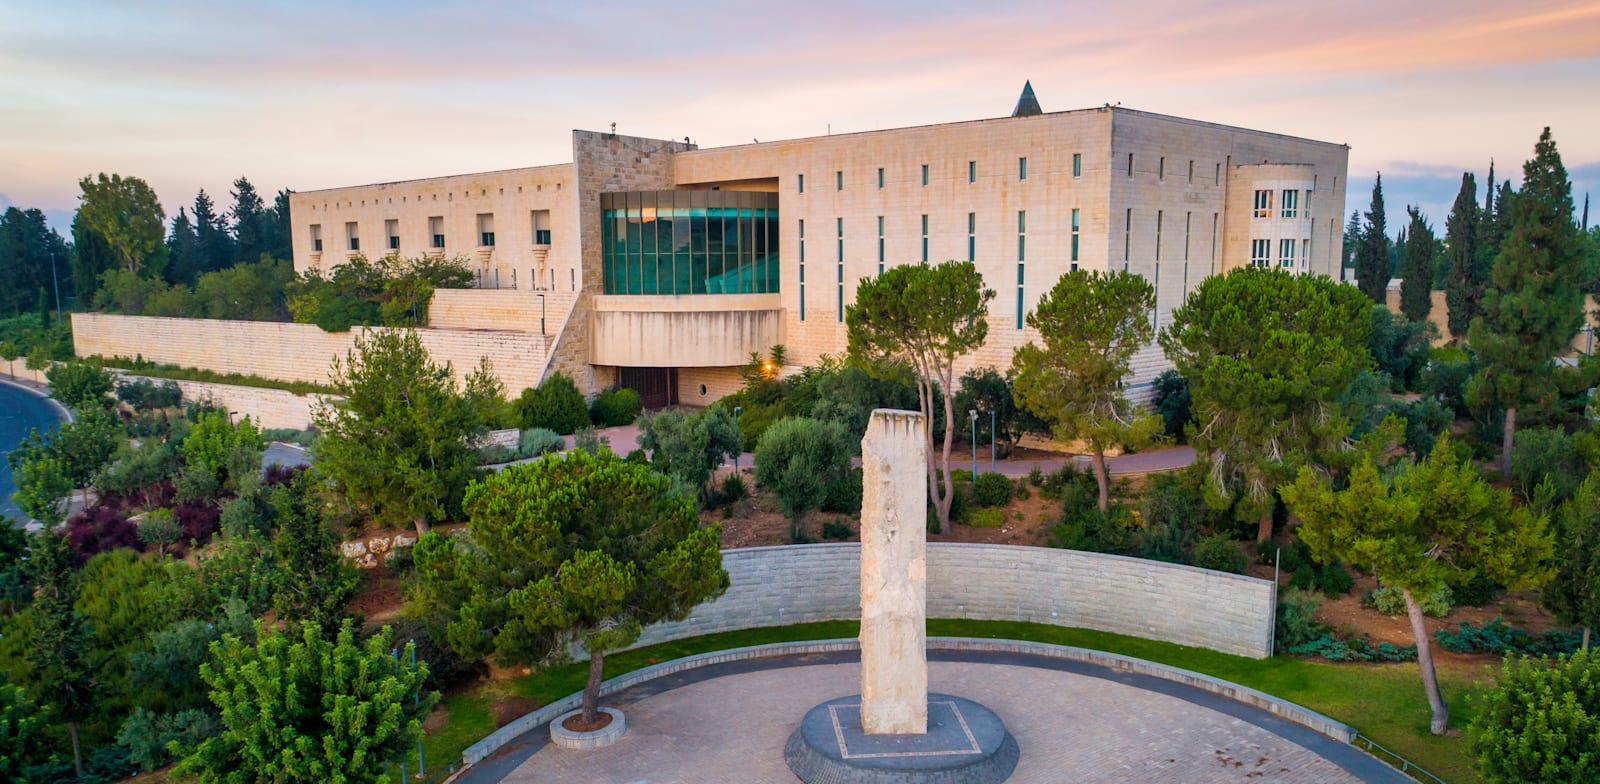 The Supreme Court, Jerusalem  credit: Seth Aronstam/Shutterstock